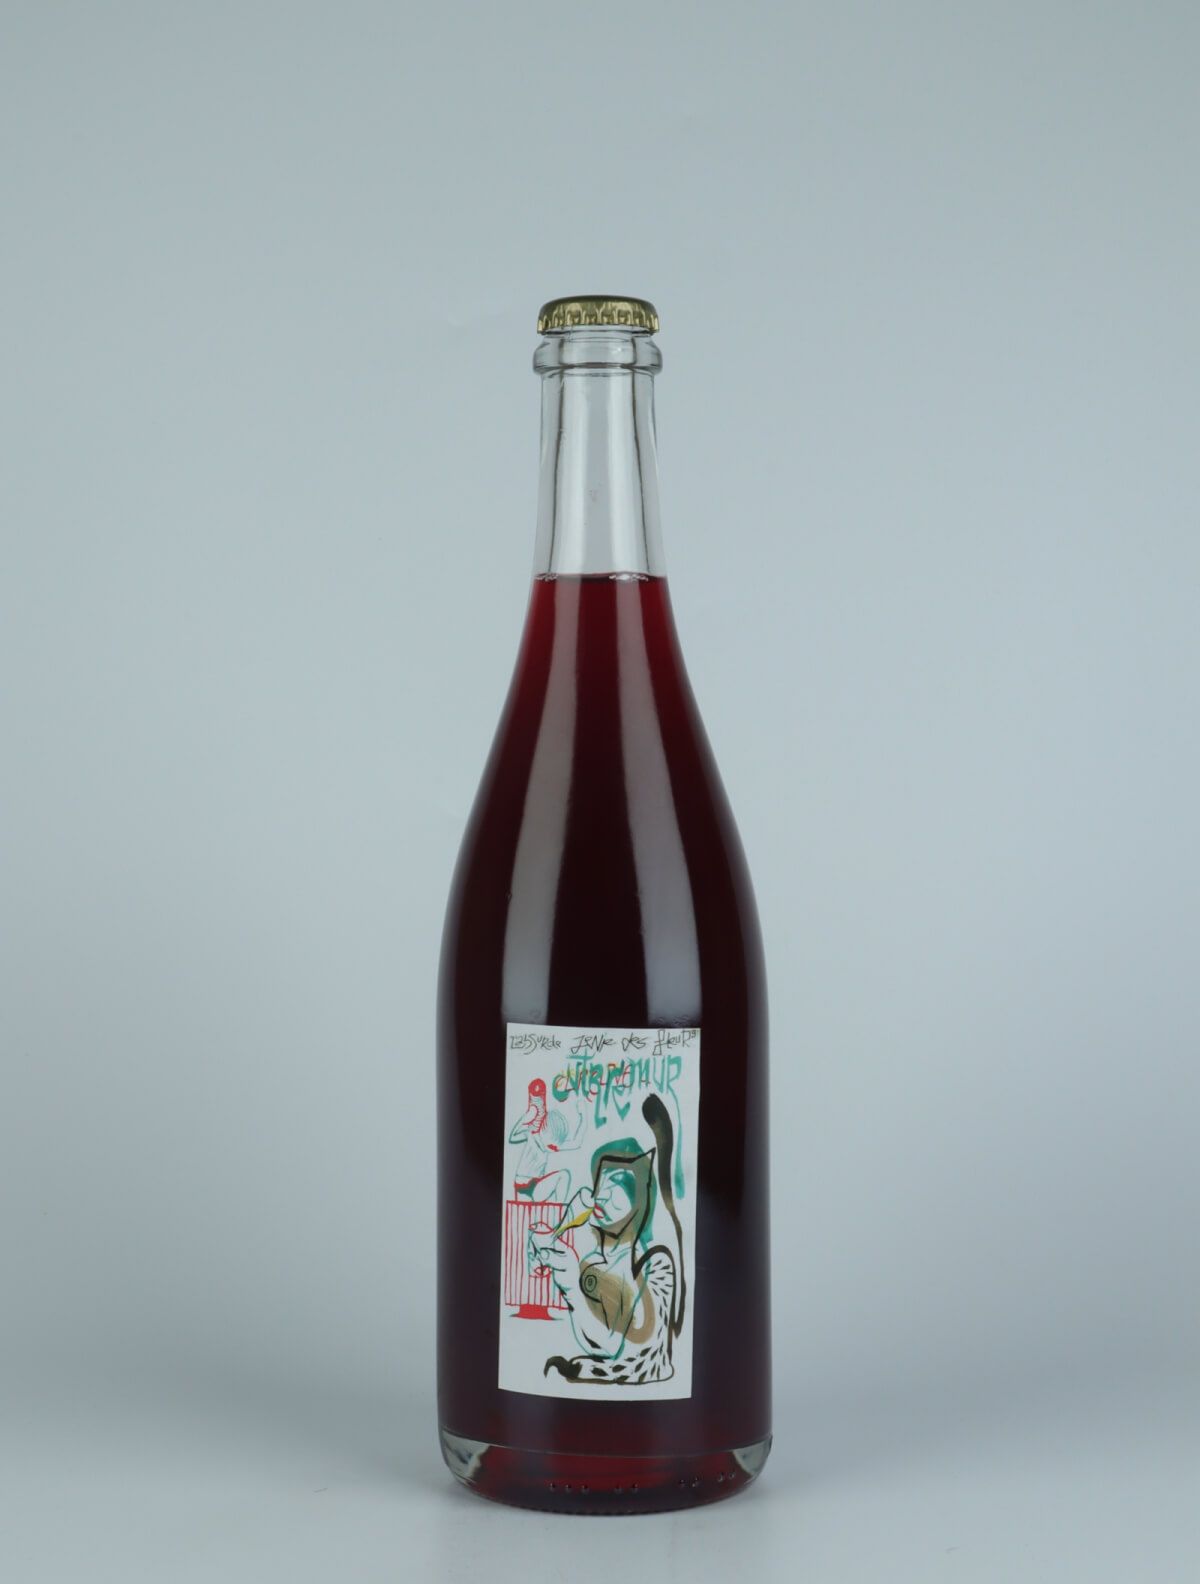 A bottle 2021 Cutremur Red wine from Absurde Génie des Fleurs, Languedoc in France